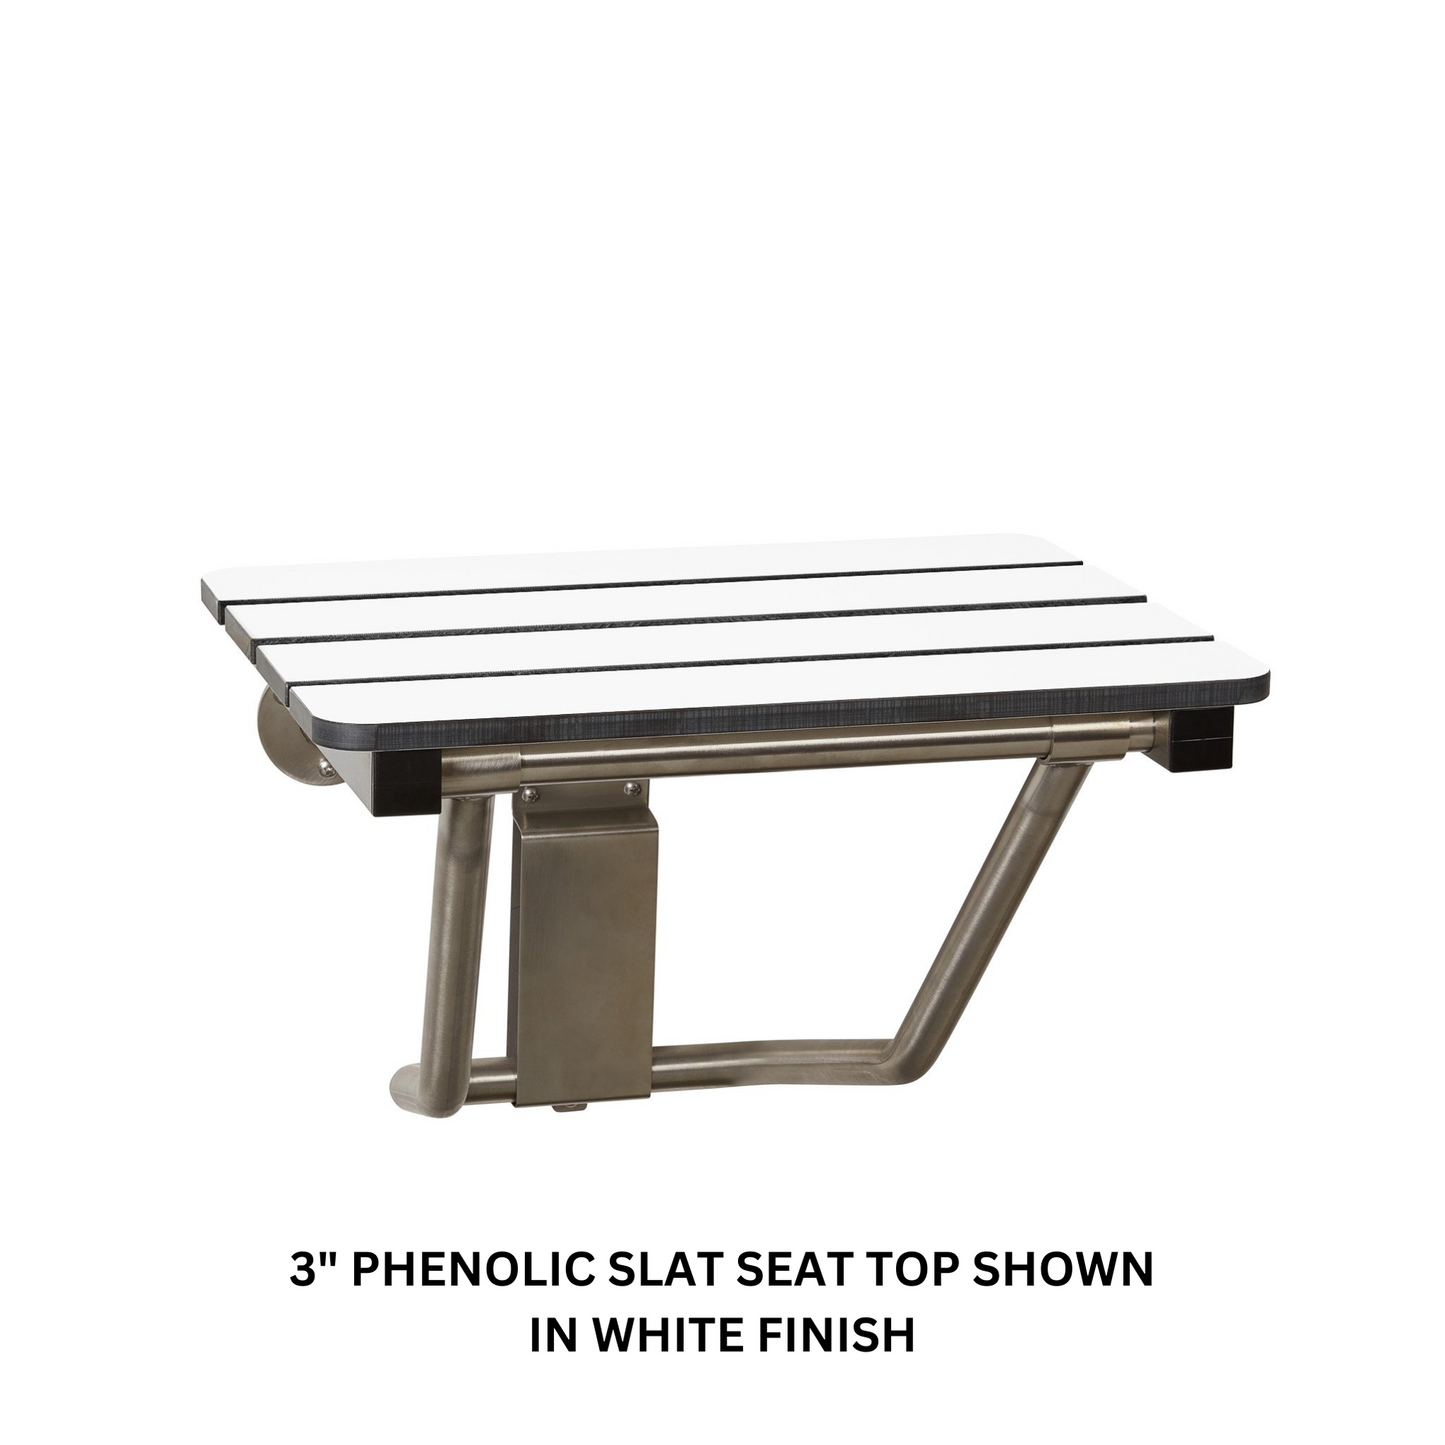 Seachrome Signature Series 22" W x 15" D Light Gray 3" Phenolic Slats Phenolic Seat Top Folding Wall Mount Bench Shower Seat